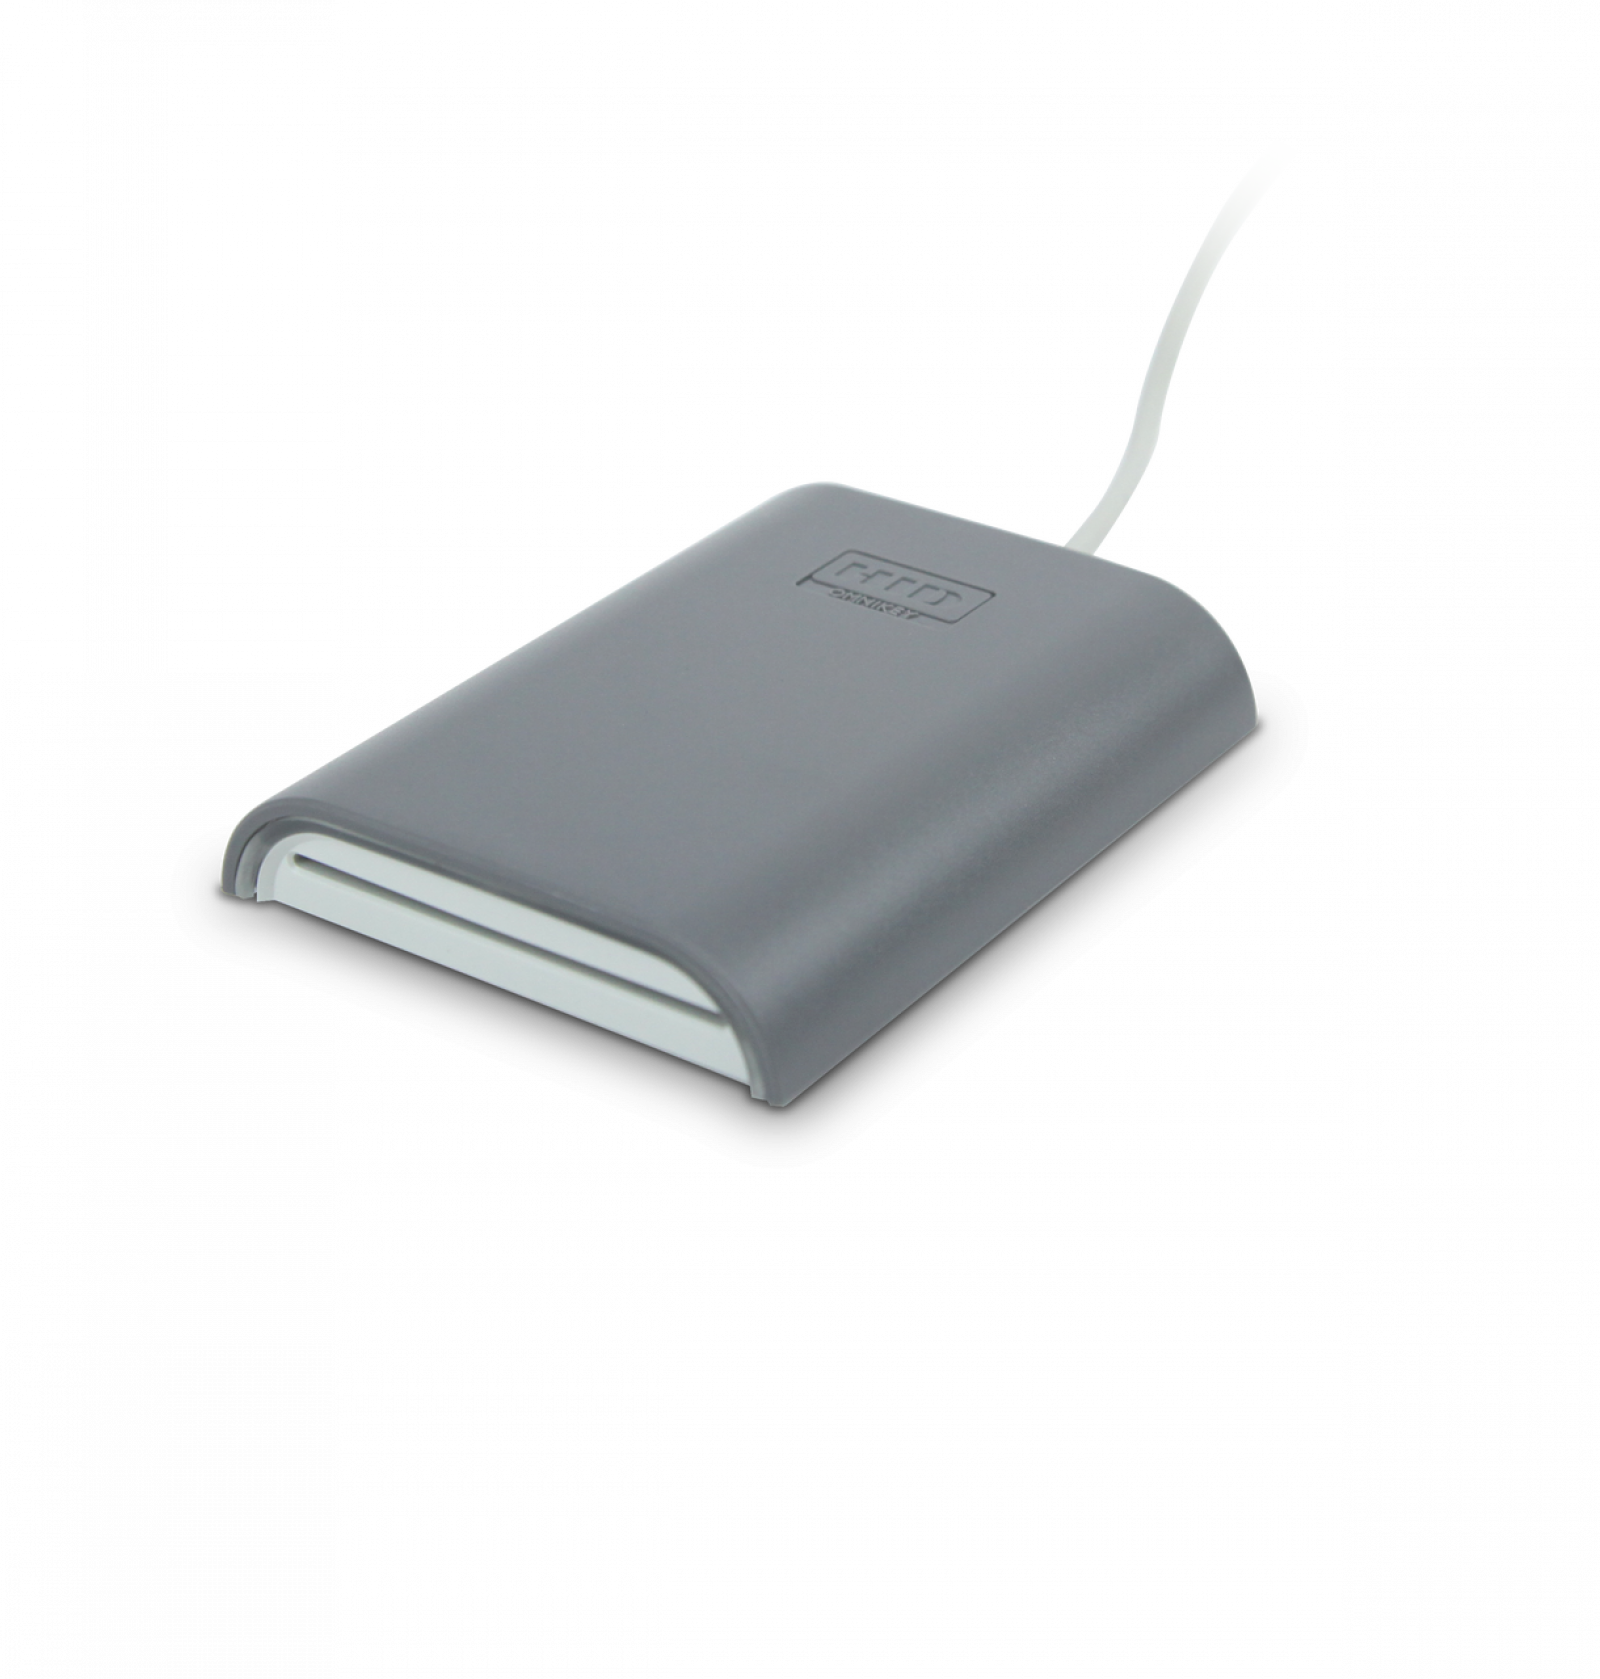 HID 5422 Dual Interface USB Reader | ID